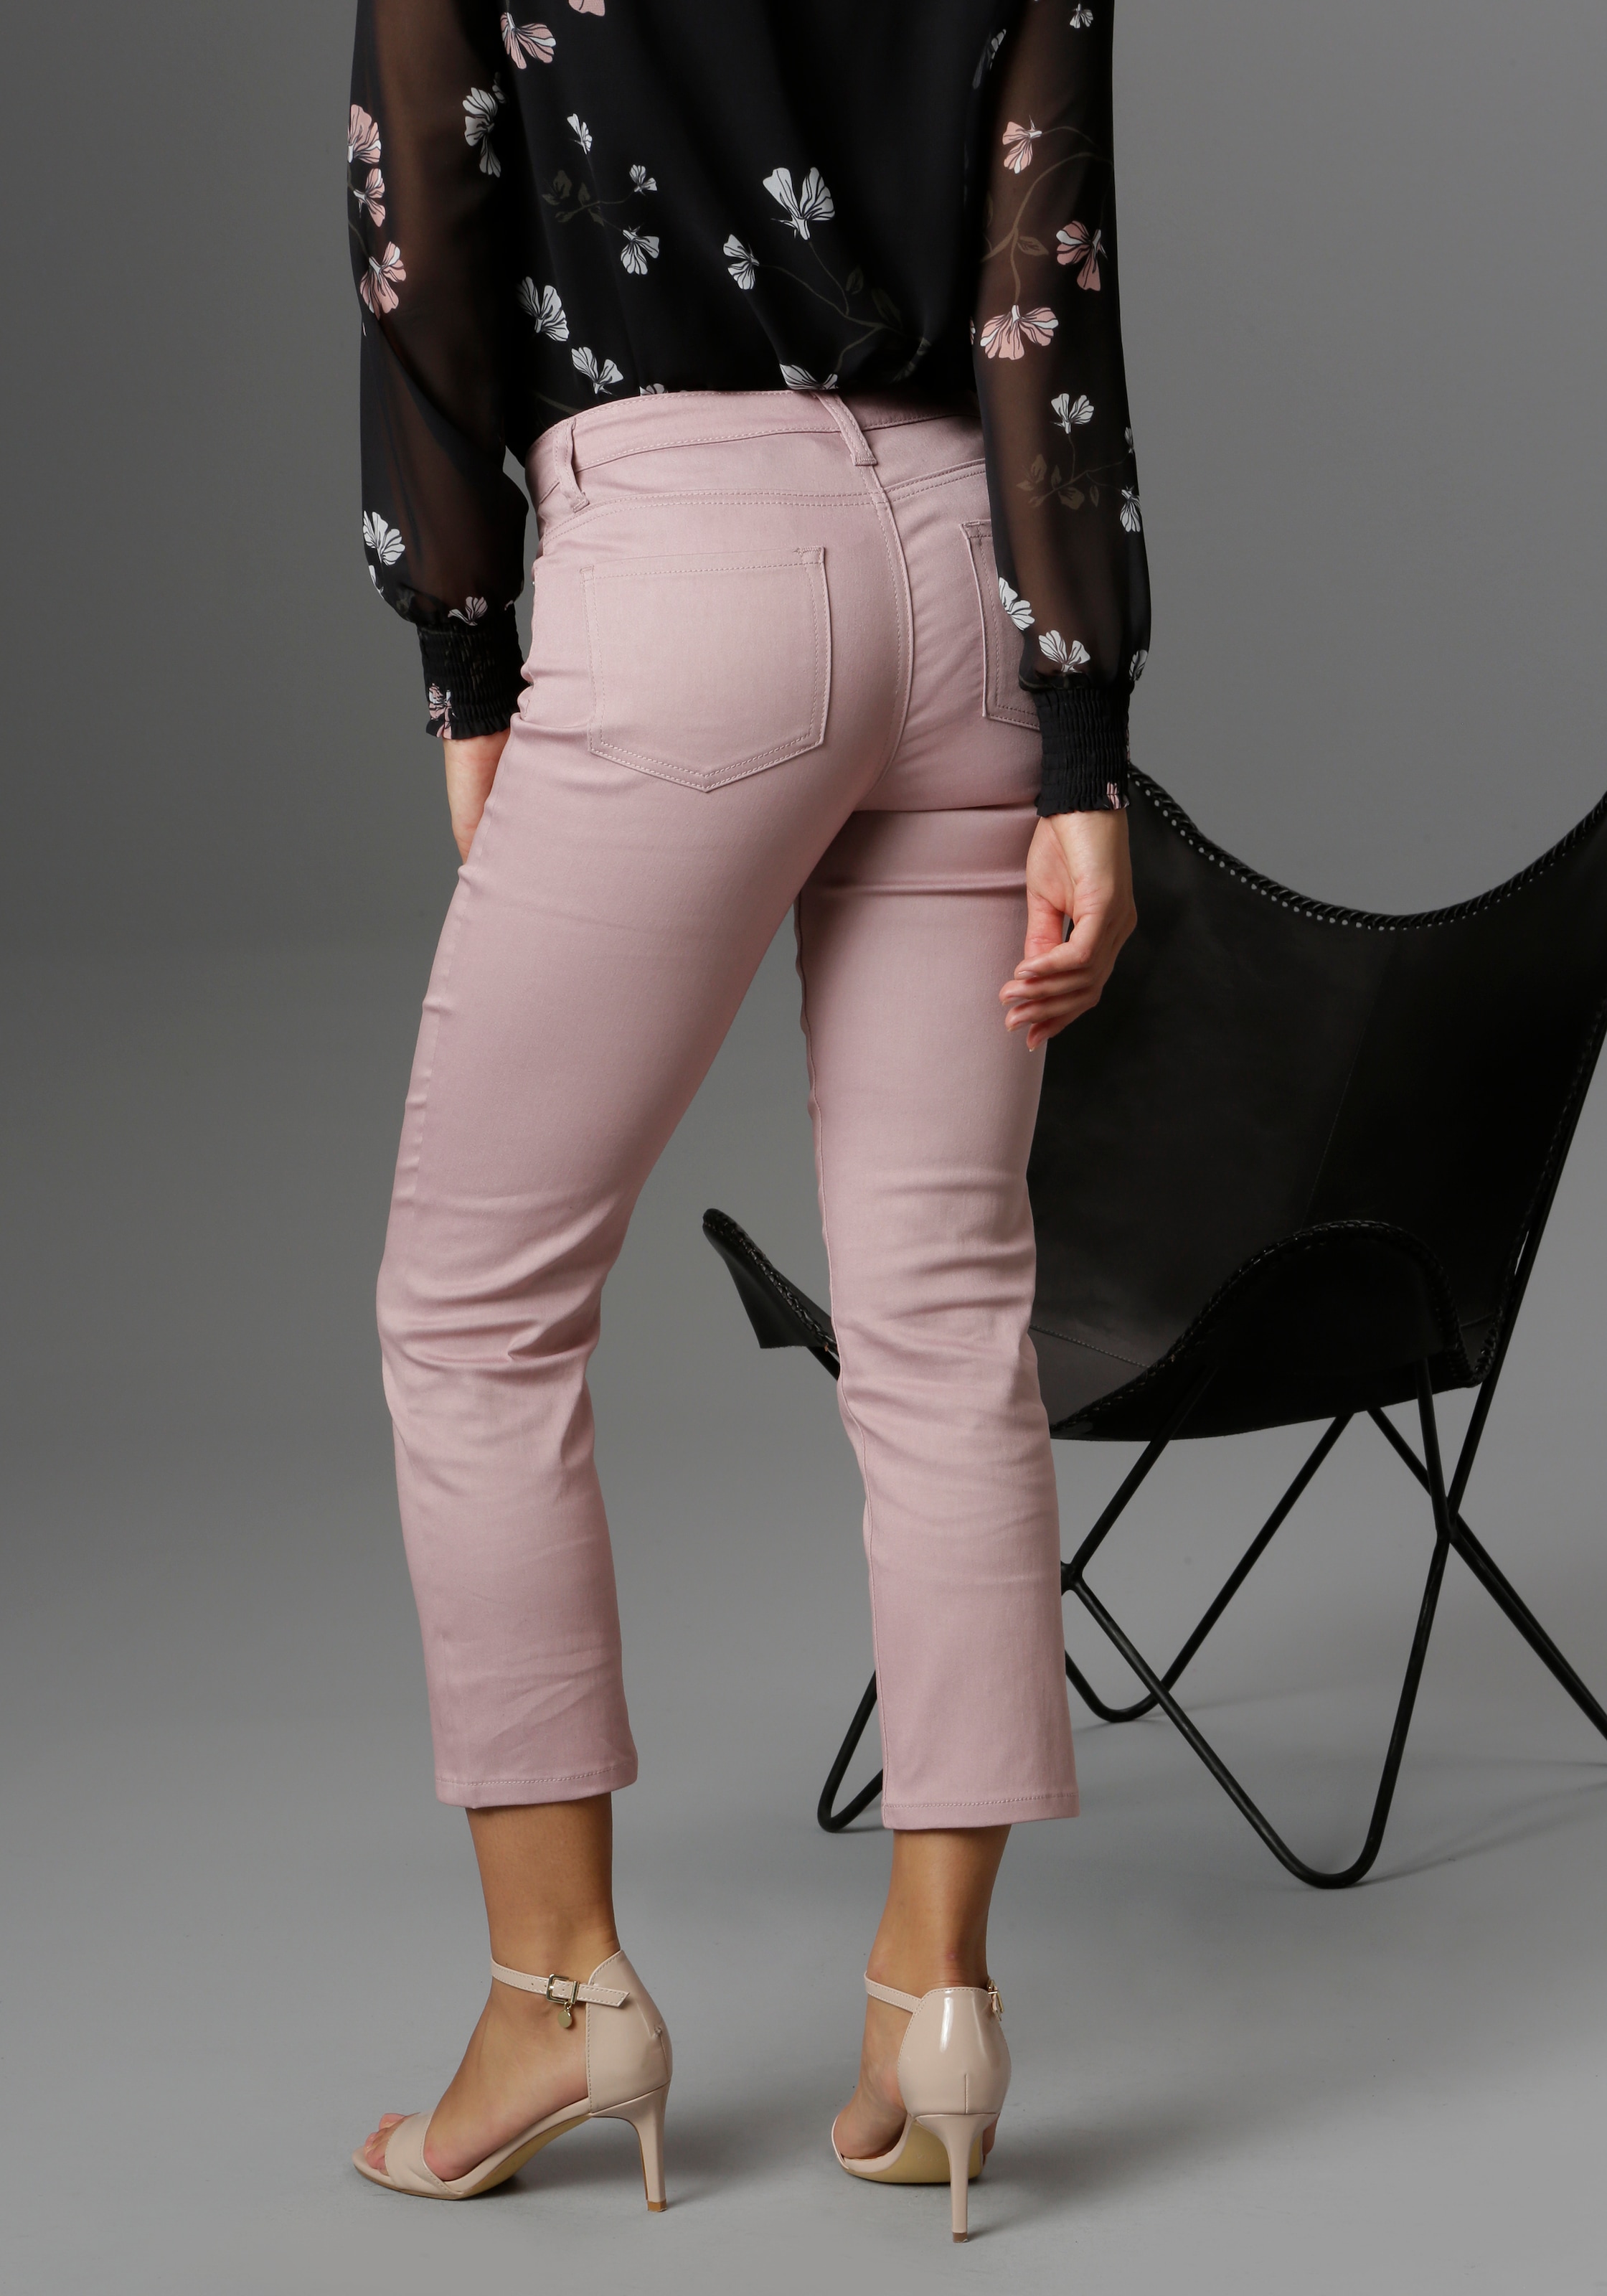 Aniston SELECTED Straight-Jeans, in verkürzter cropped Länge